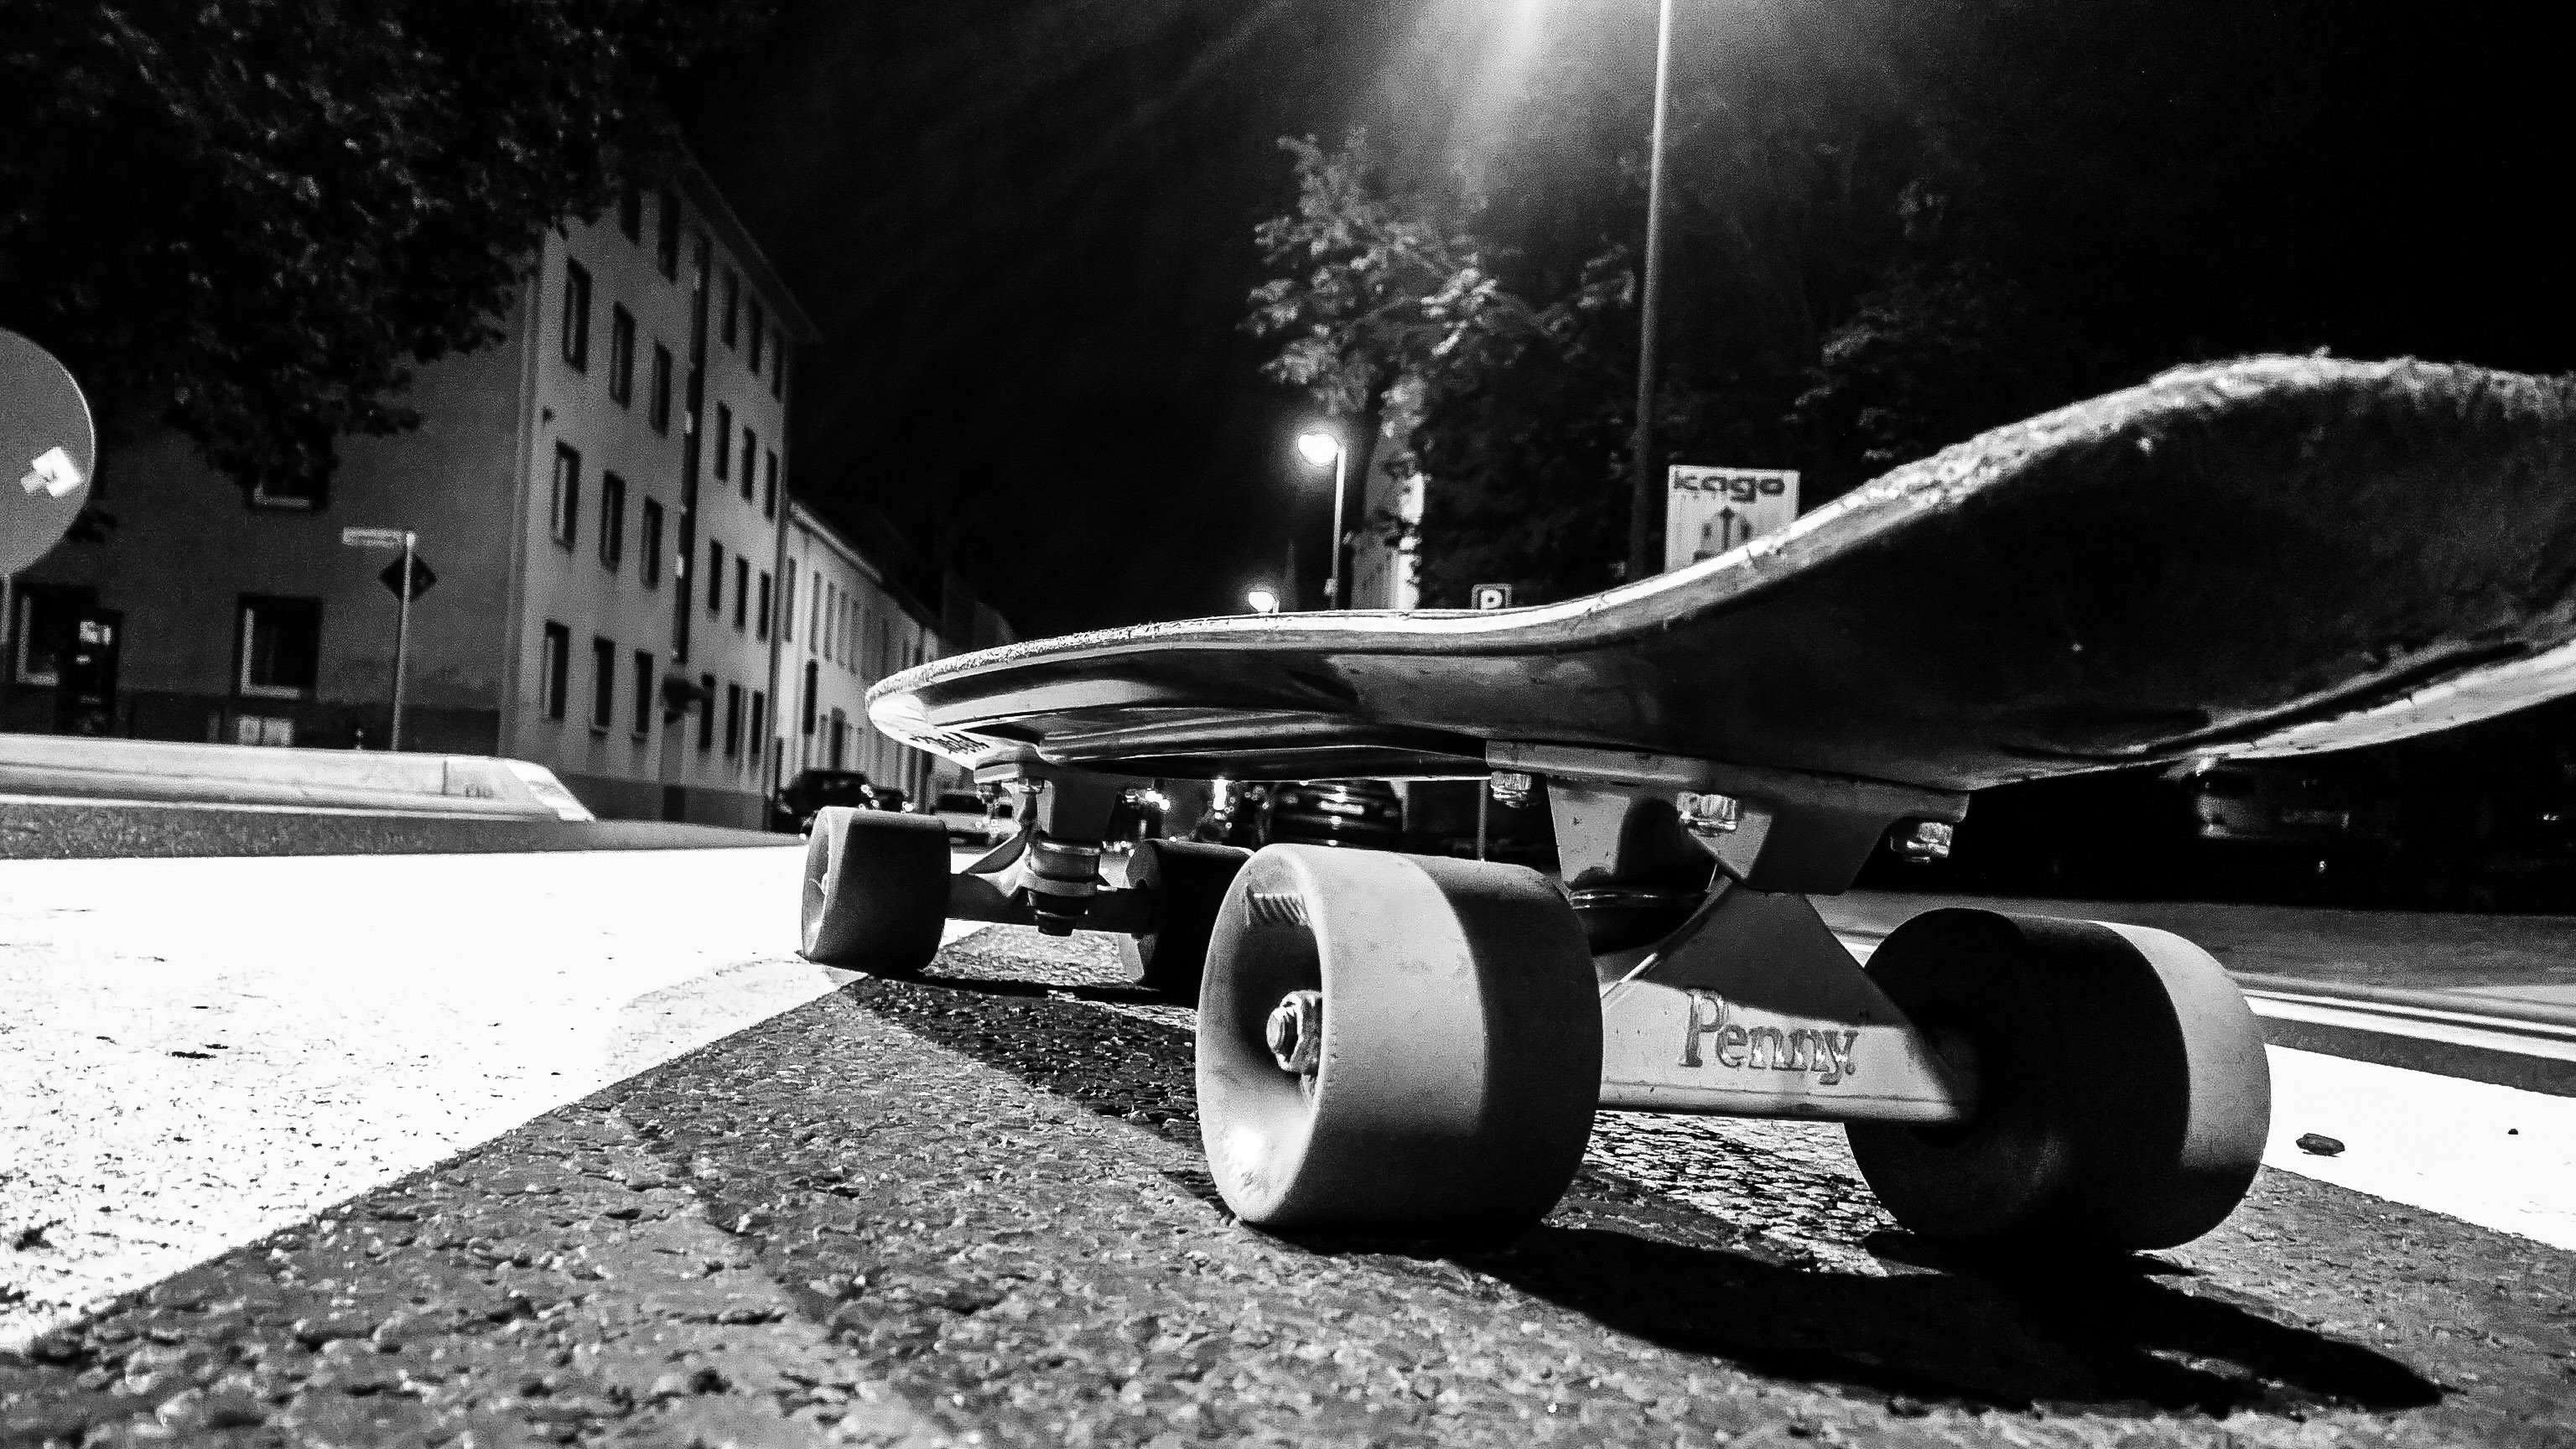 3072x1728 Penny Skateboards Skateboard Monochrome Streets Night